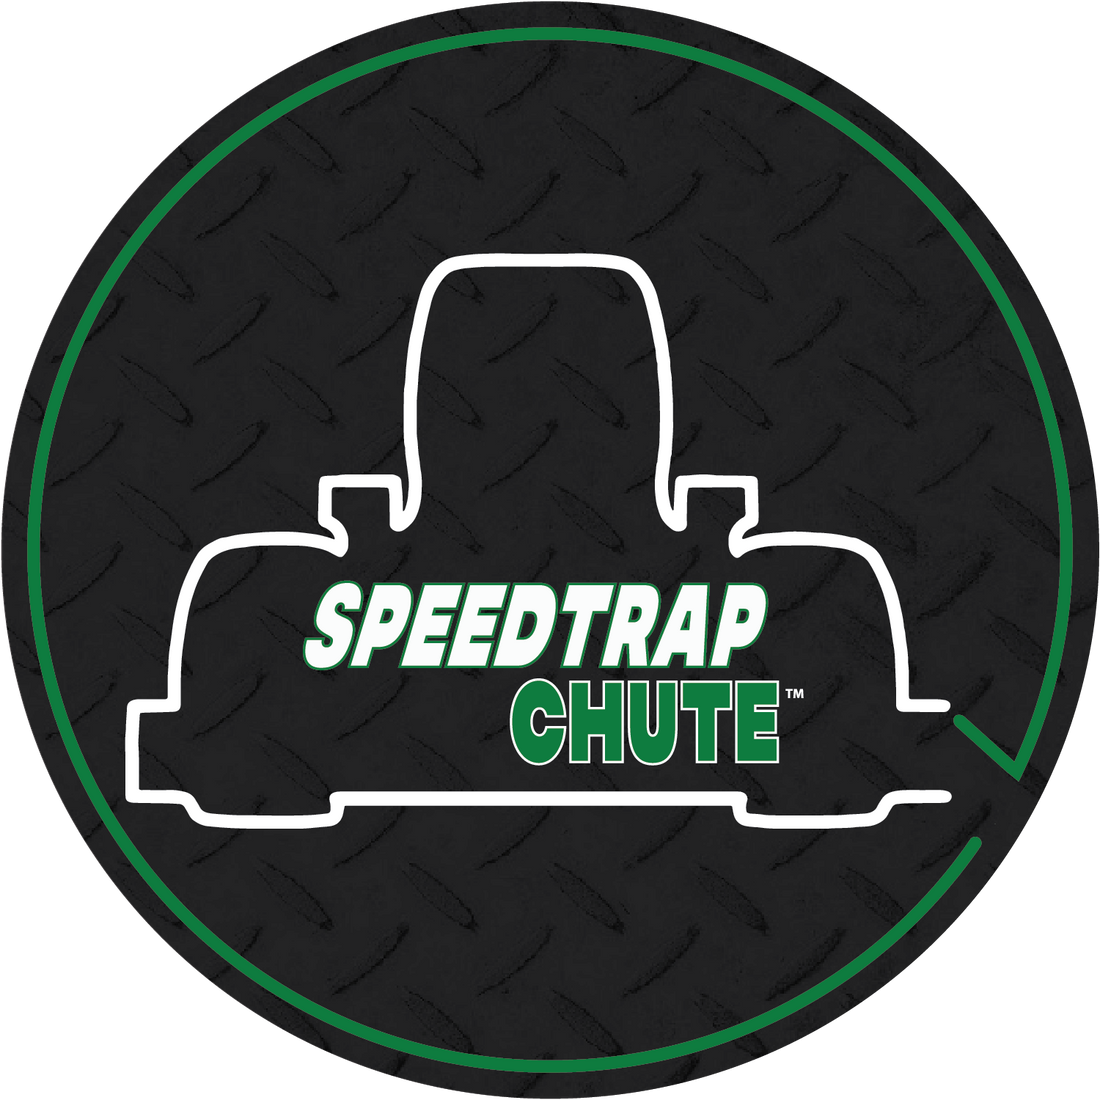 Speedtrap Chute logo 